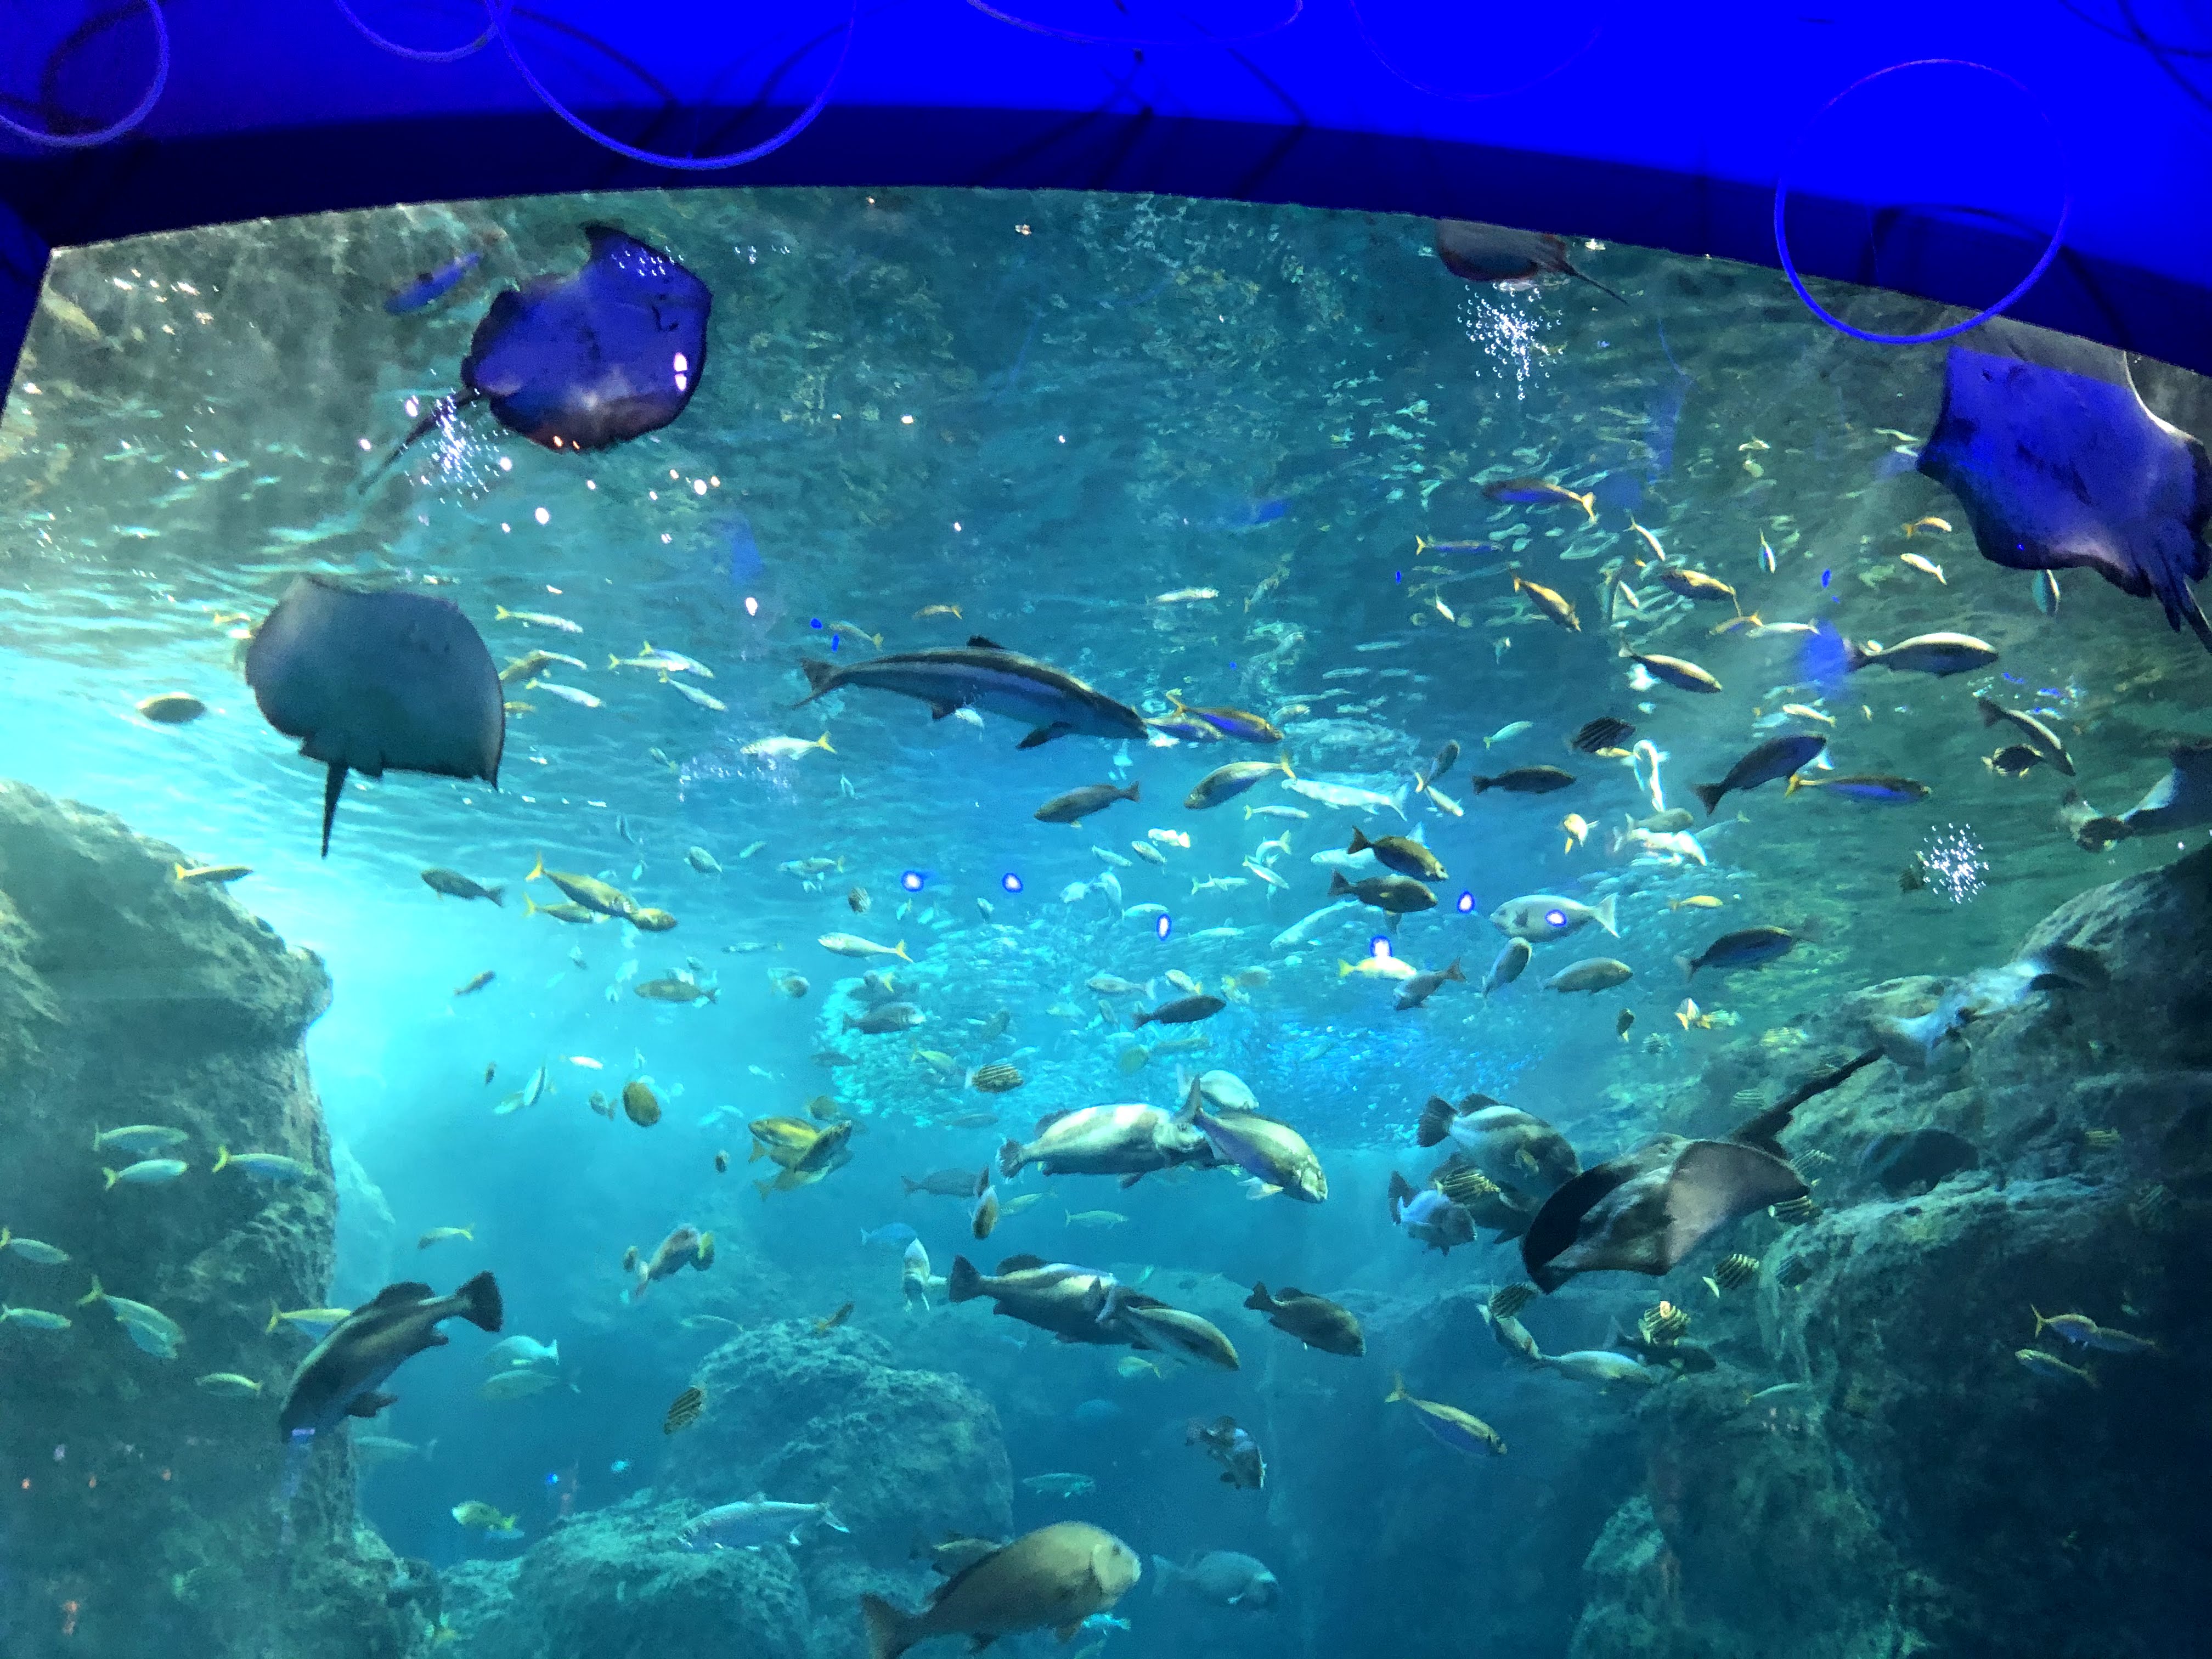 3 Enoshima Aquarium.jpg (1.31 MB)